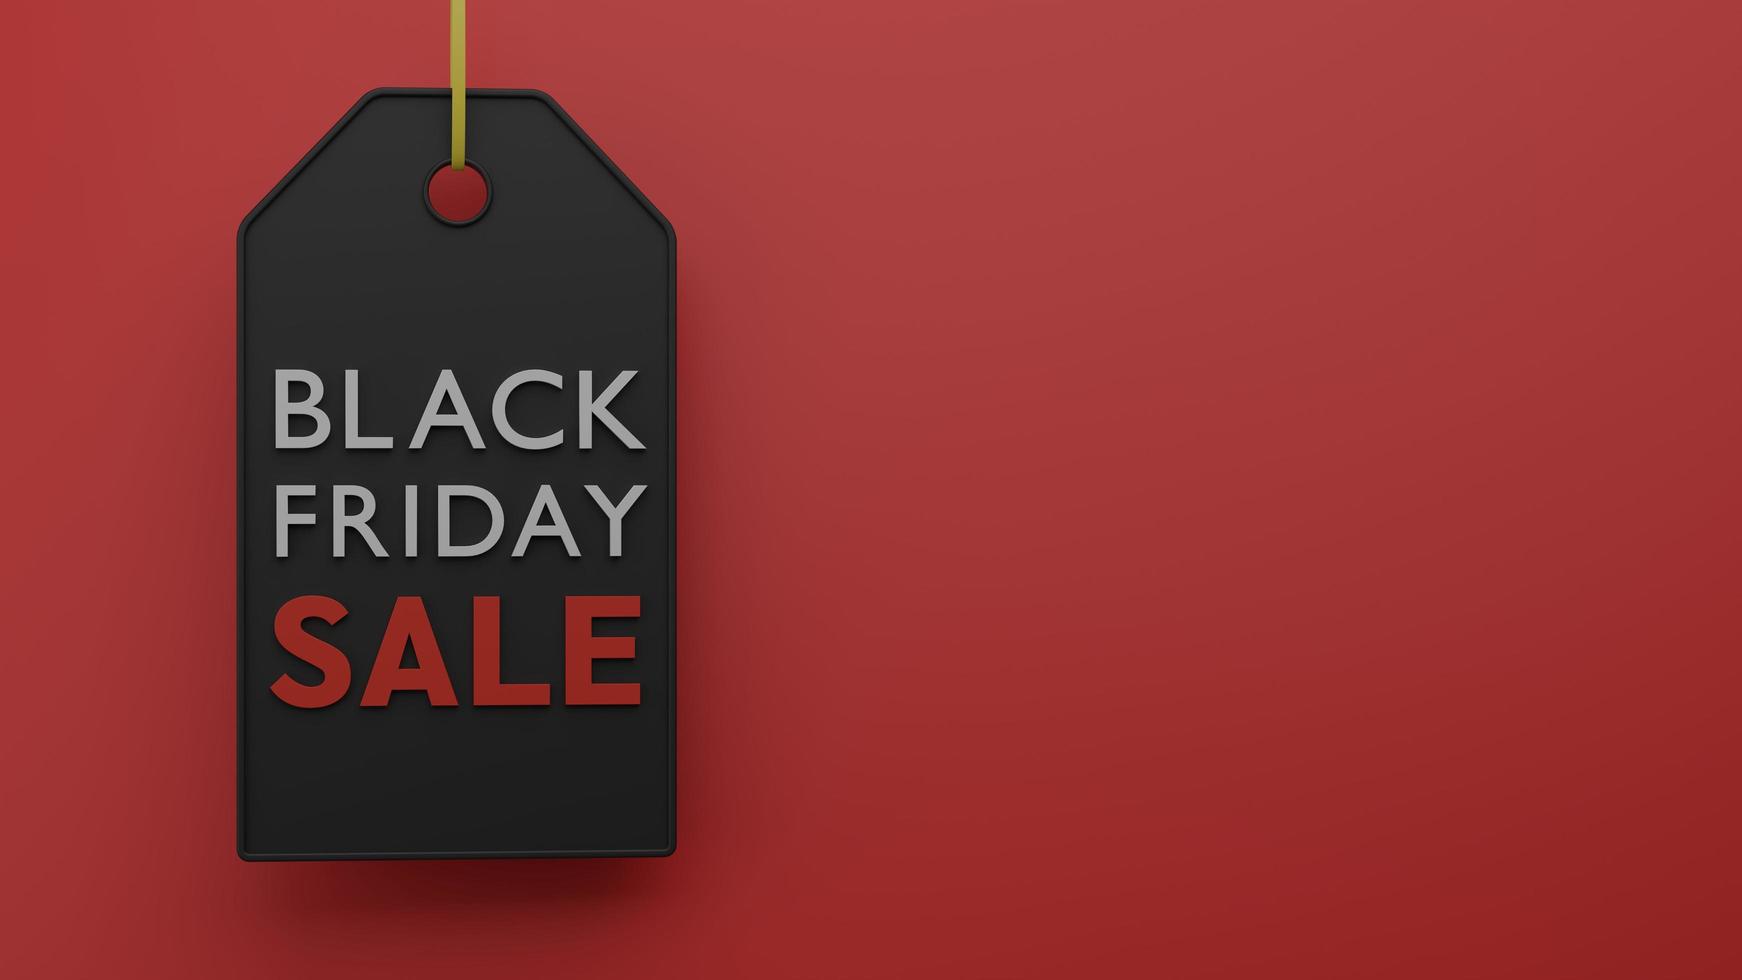 Black Friday Sale dark price tag 3D render illustration photo